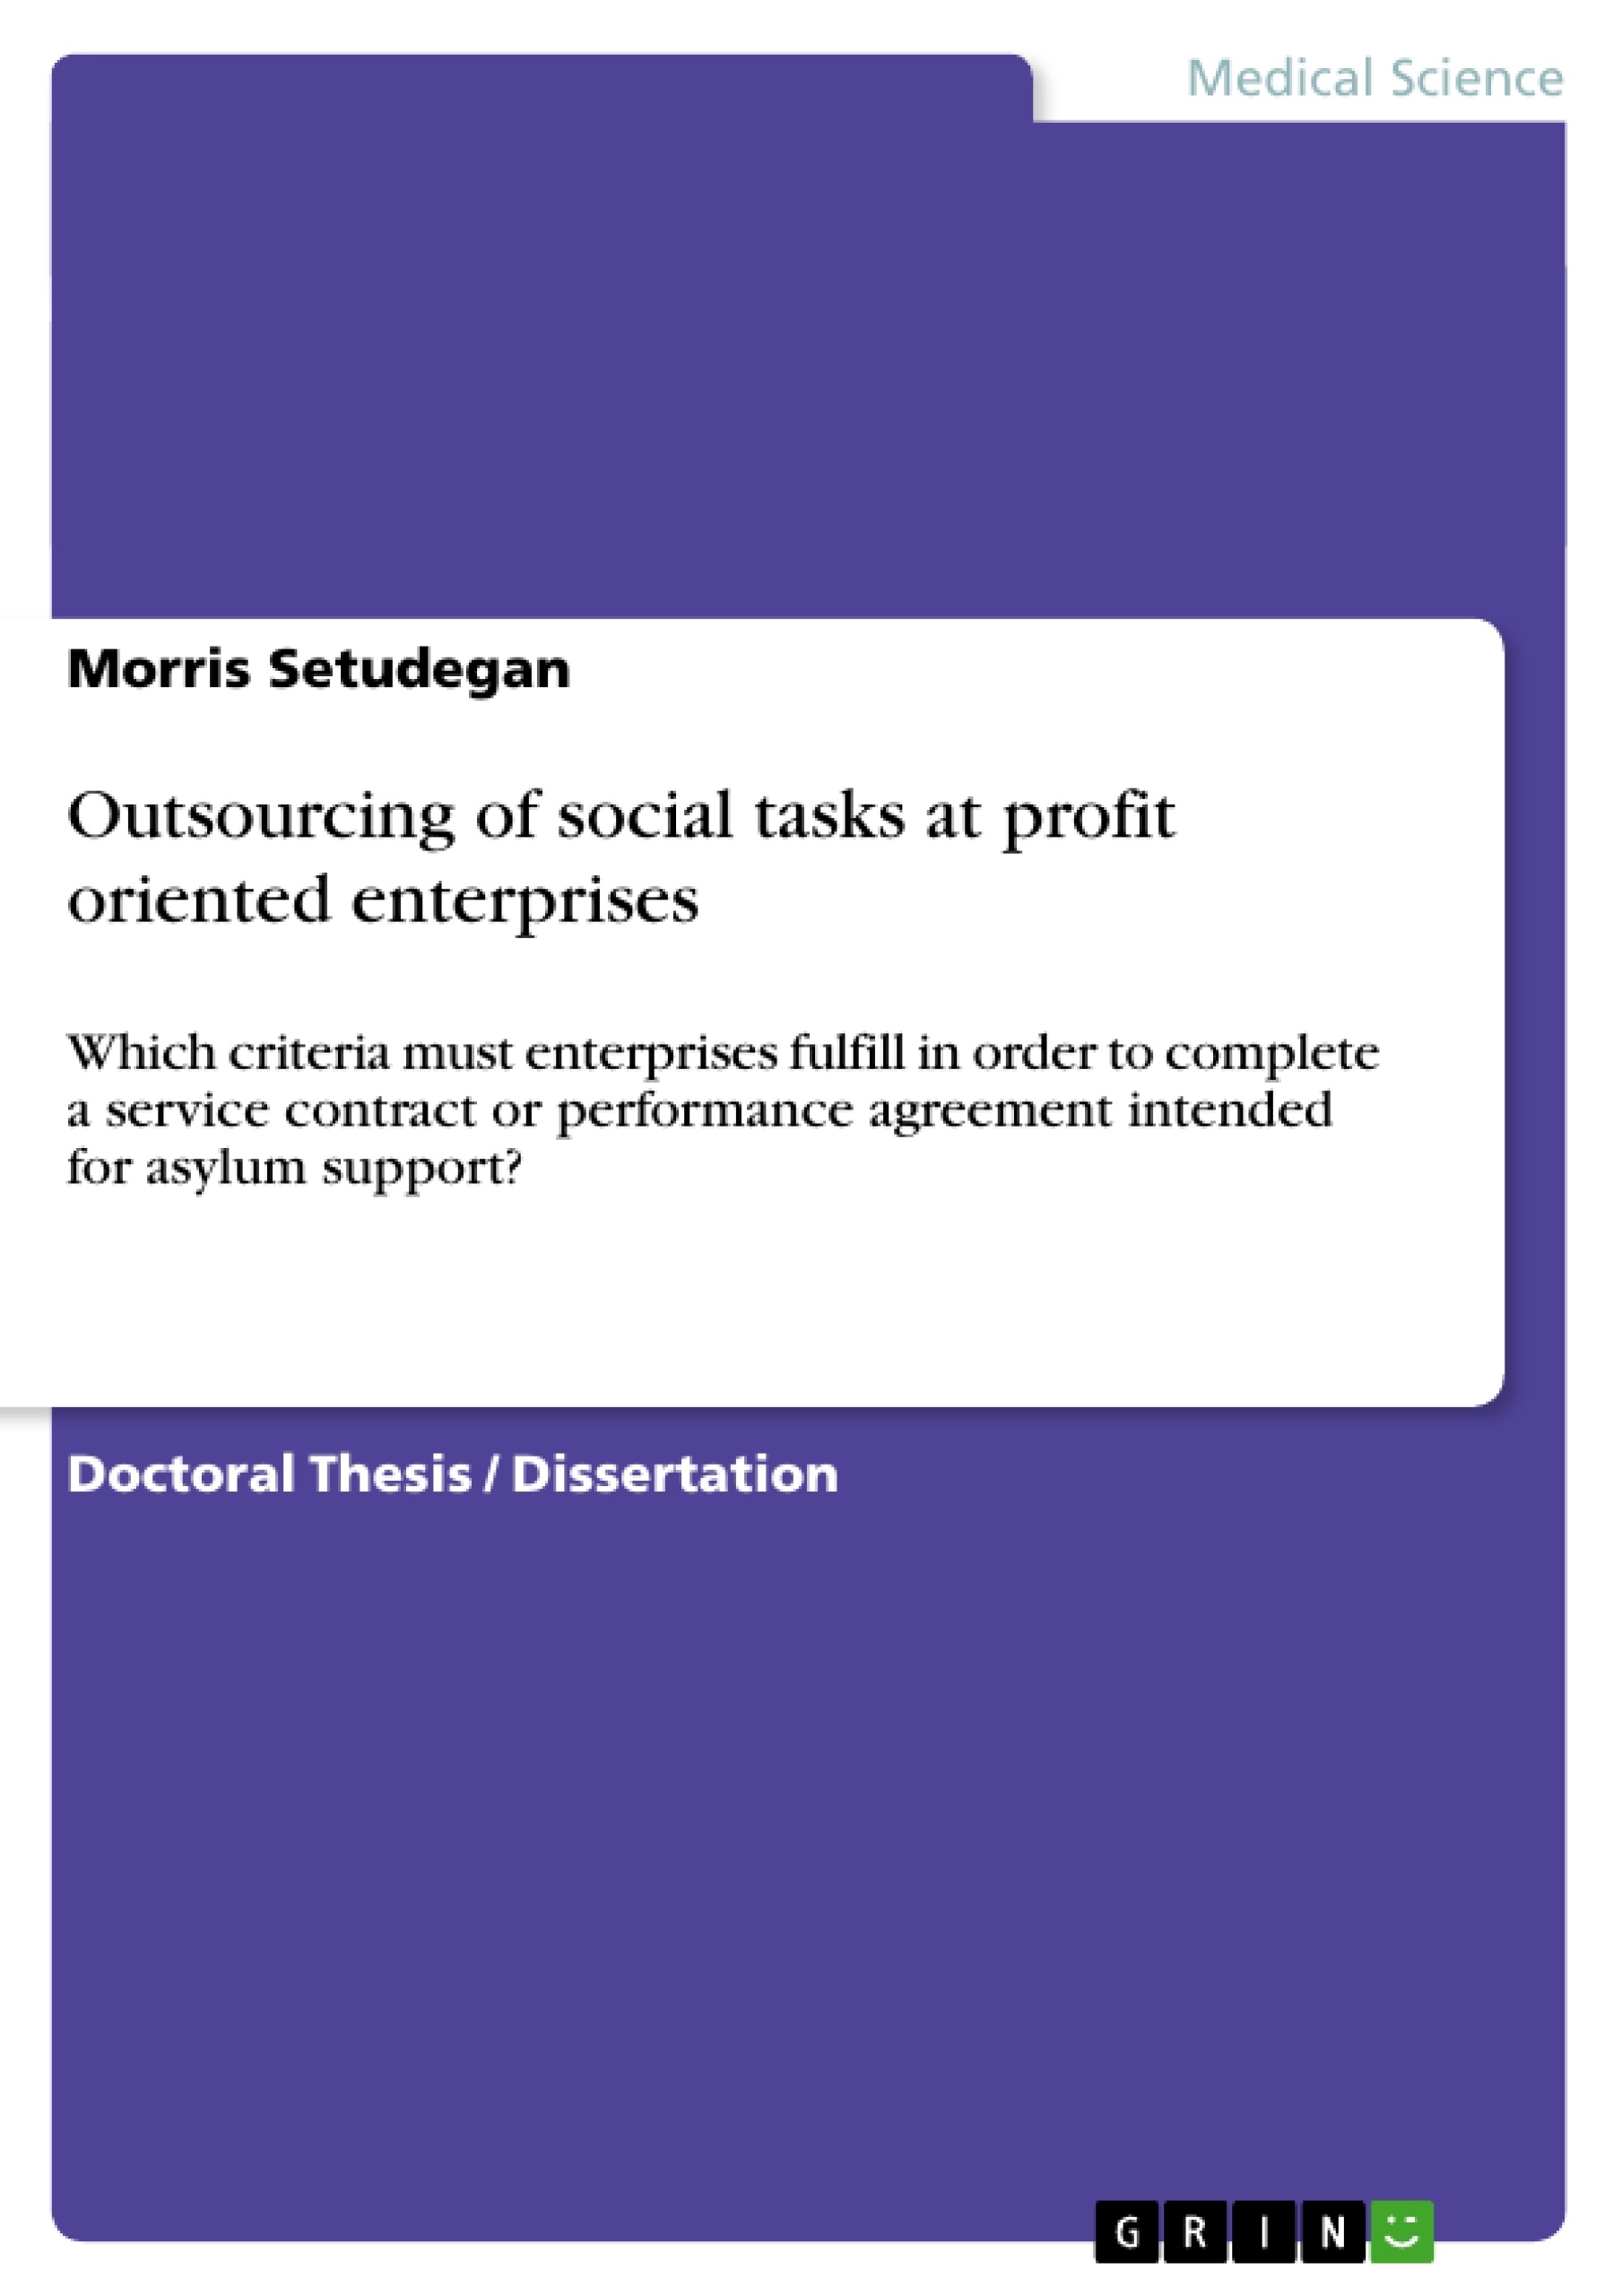 Title: Outsourcing of social tasks at profit oriented enterprises